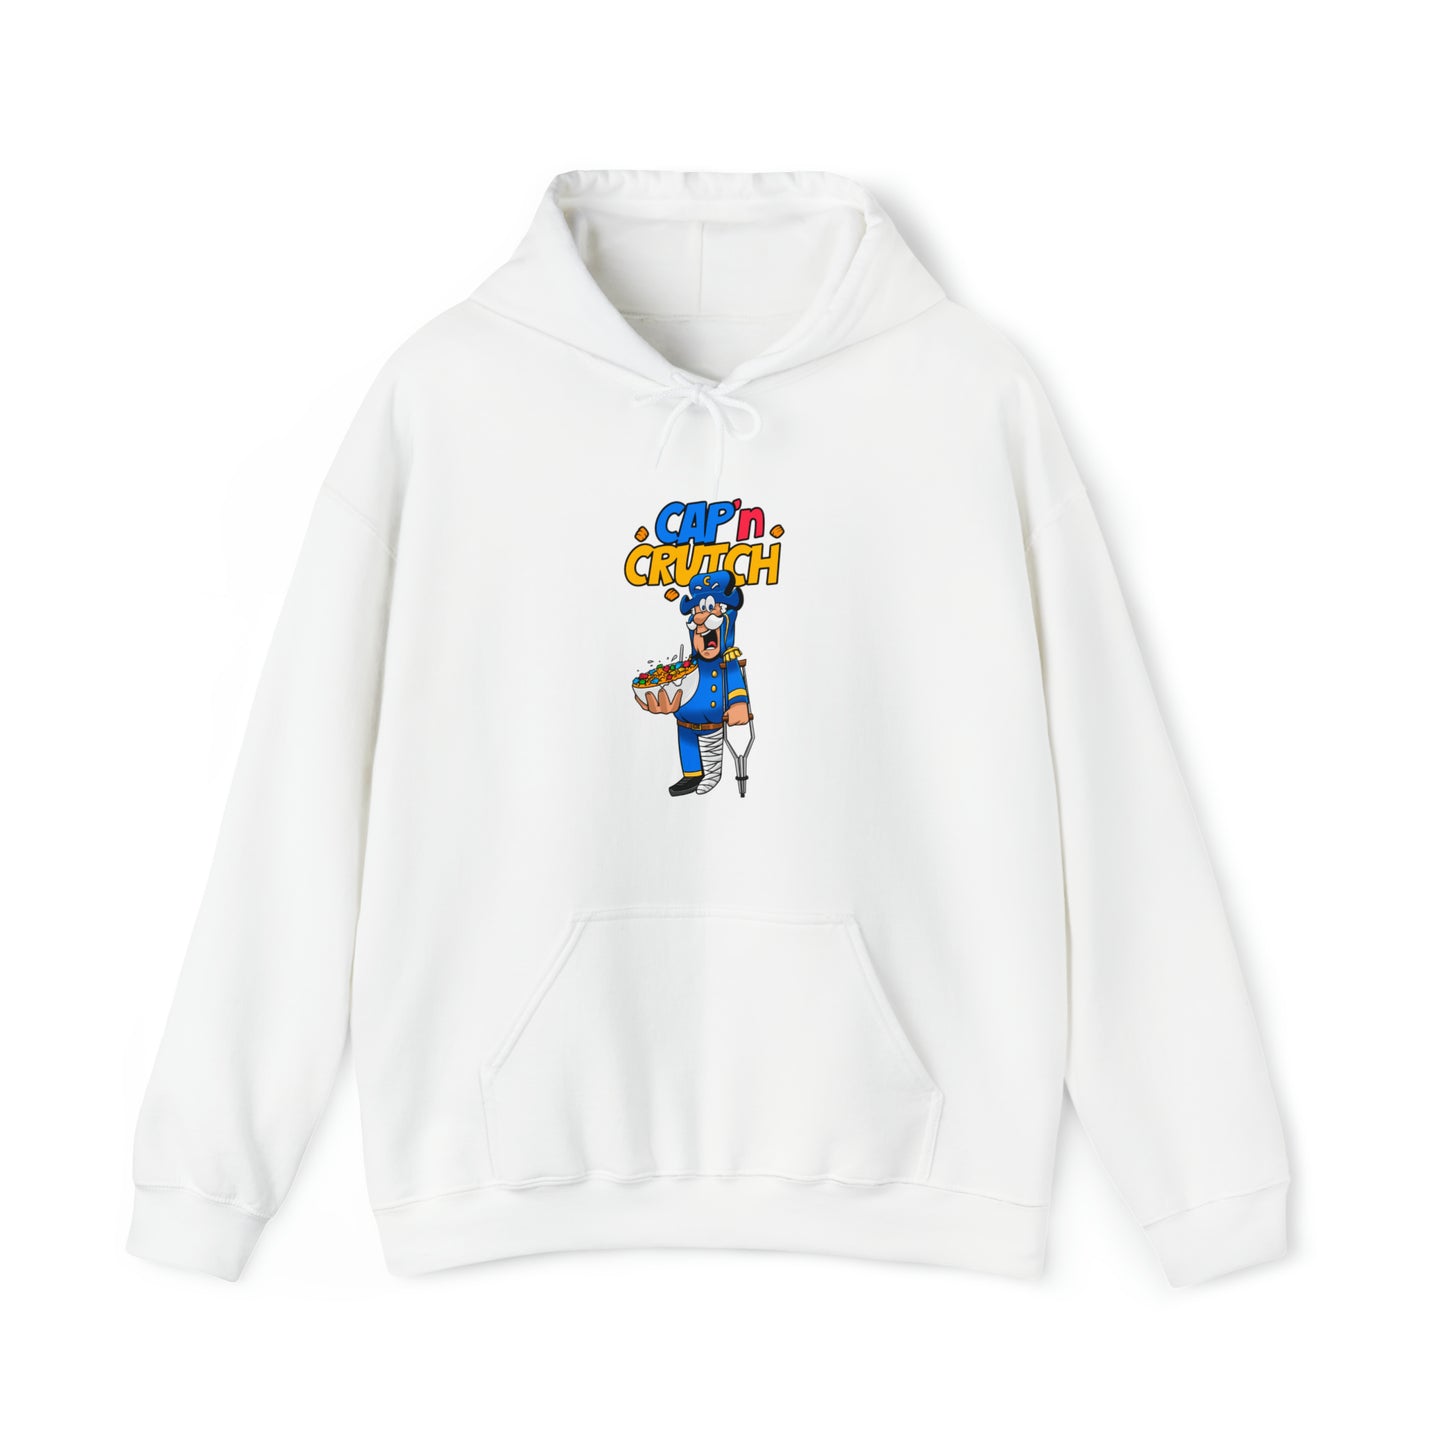 Custom Parody Hooded Sweatshirt, Cap N Crutch design